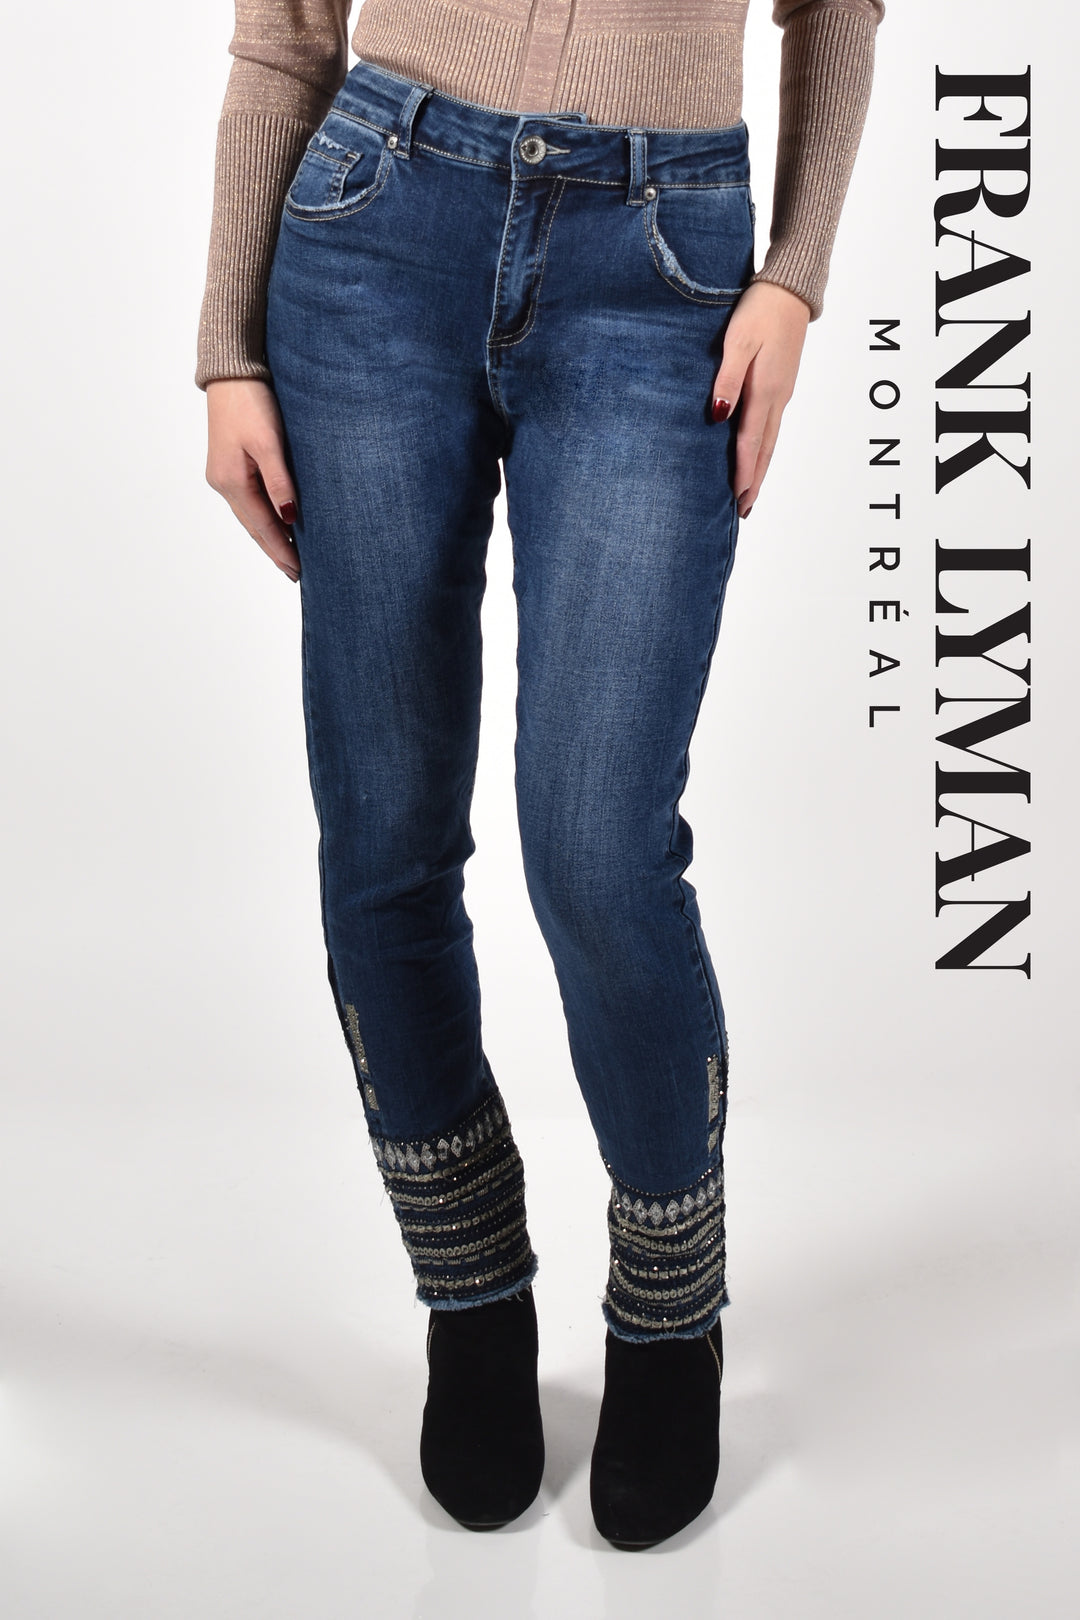 Frank Lyman 213121U Dark Blue Glitter Jeans Lifestyle | Dotique